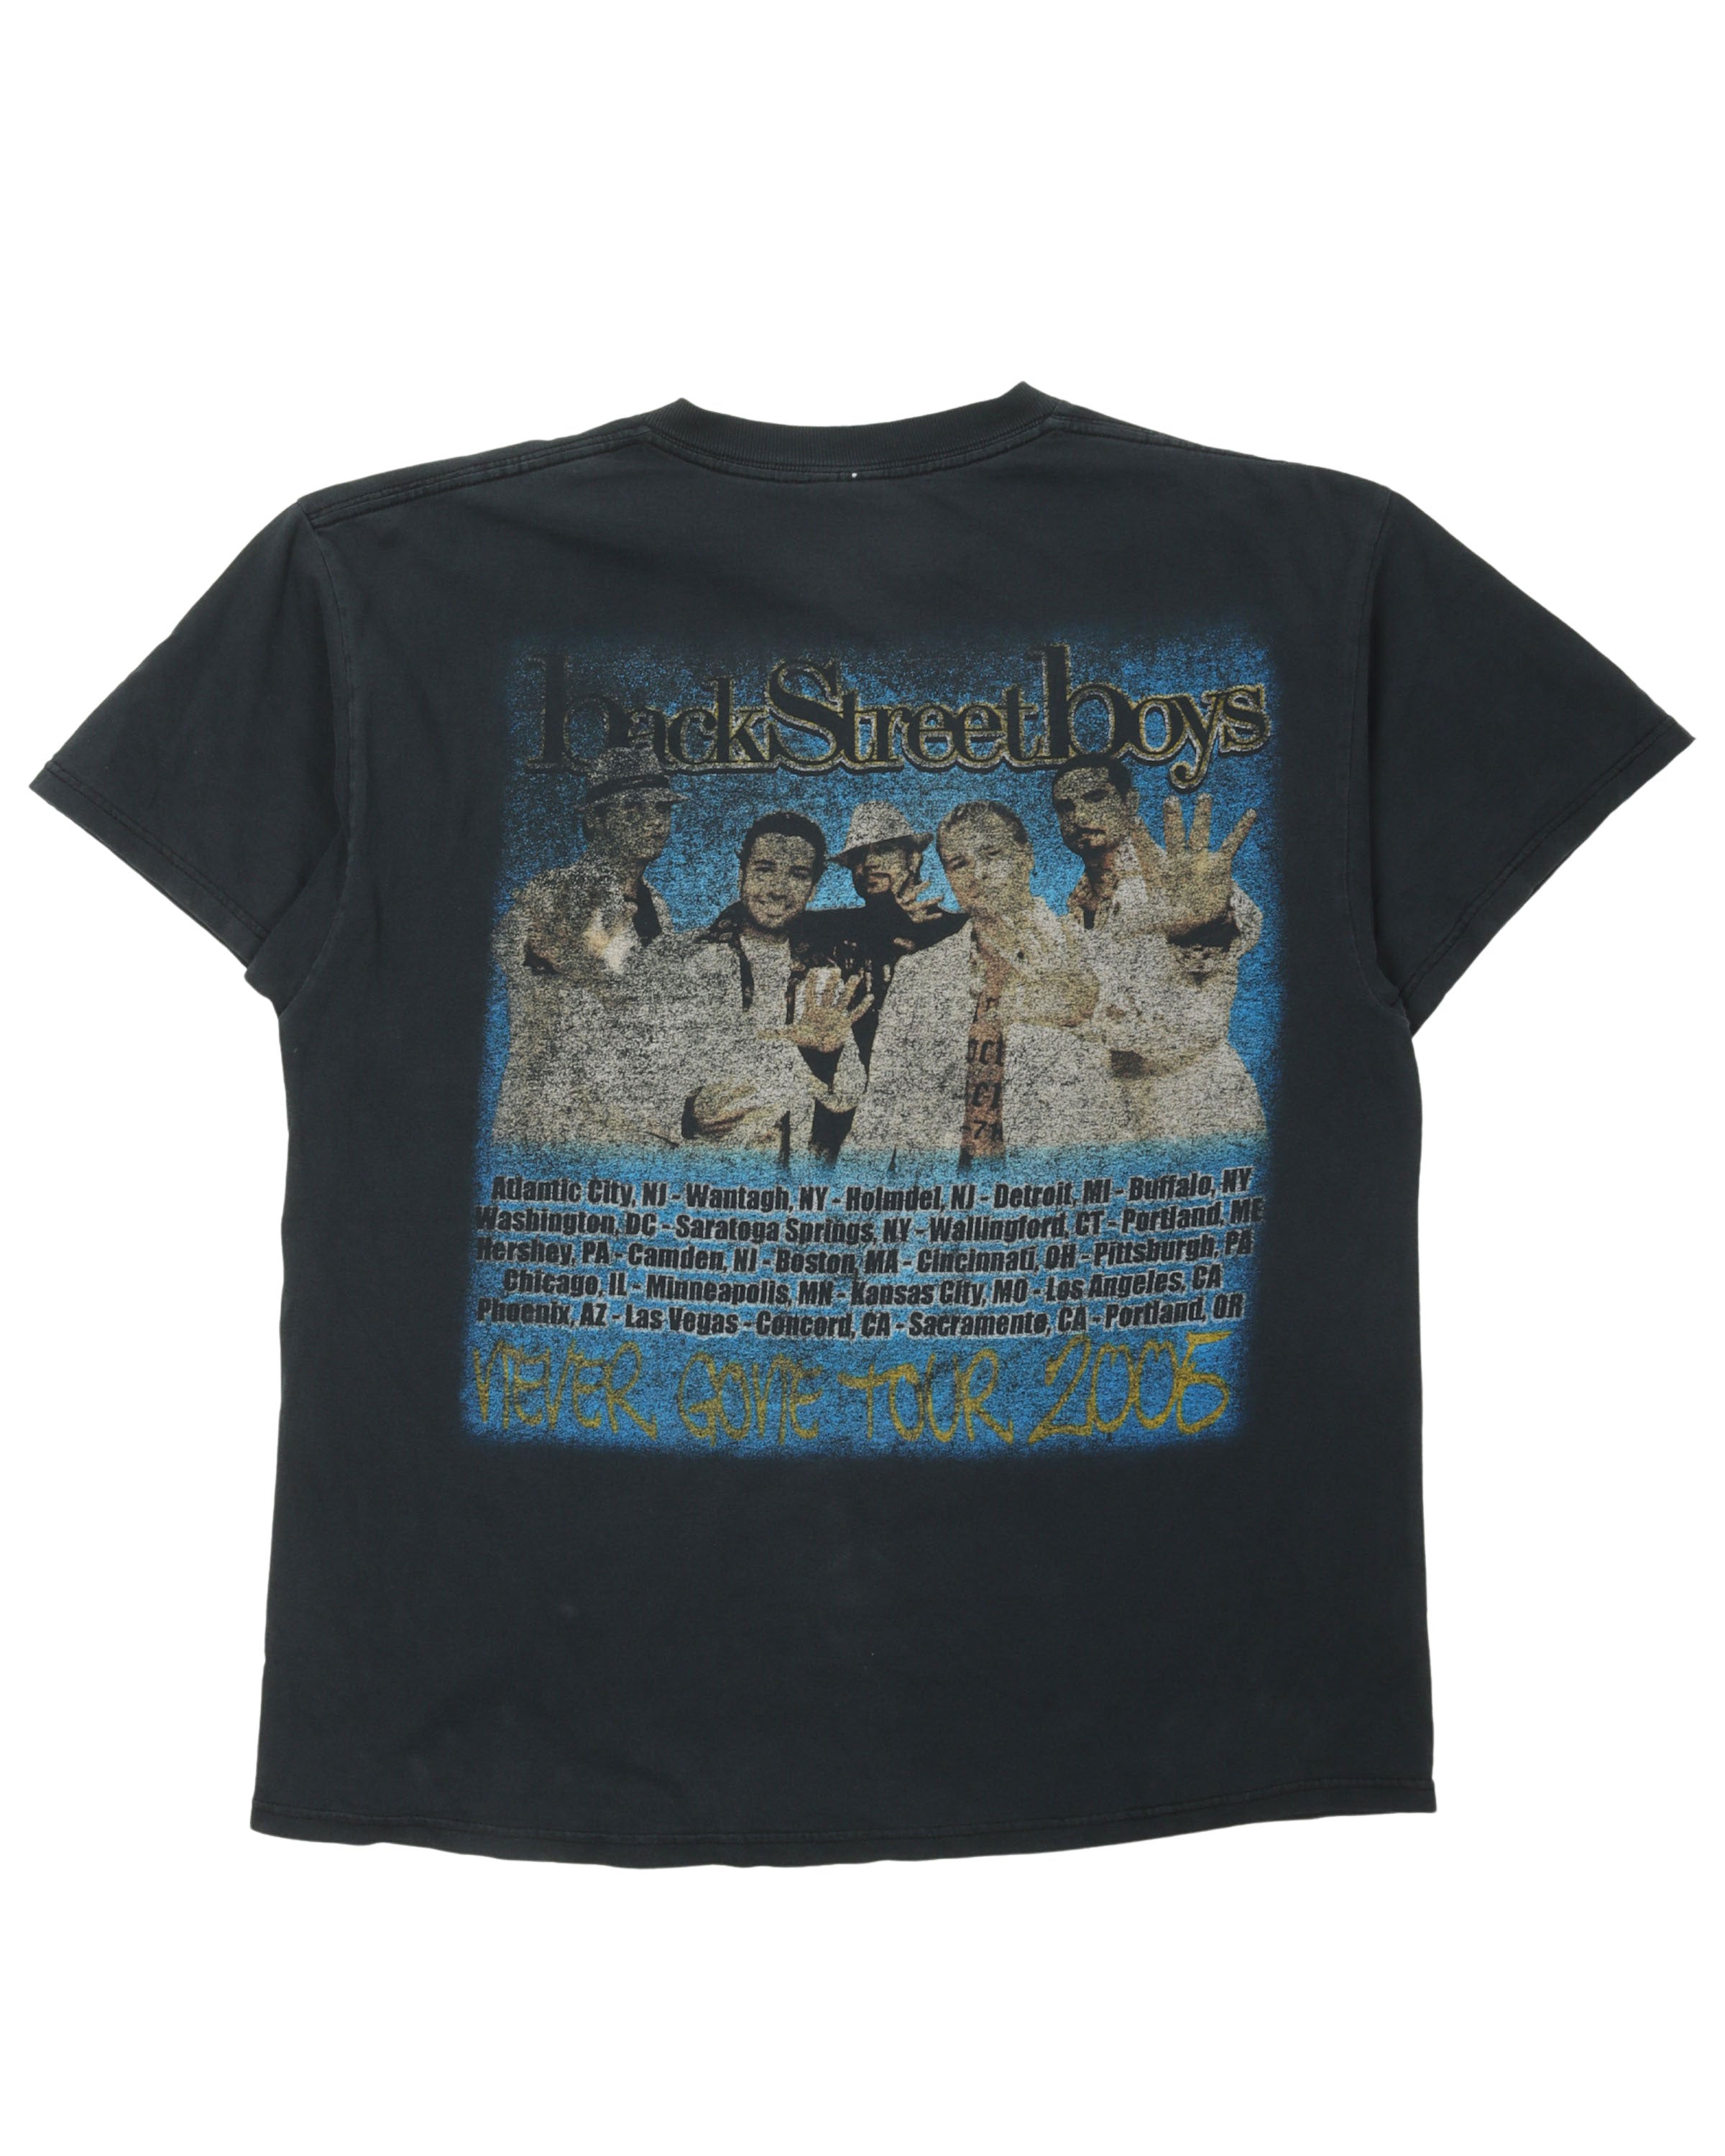 Backstreet Boys "Never Gone Tour" T-Shirt (2005)